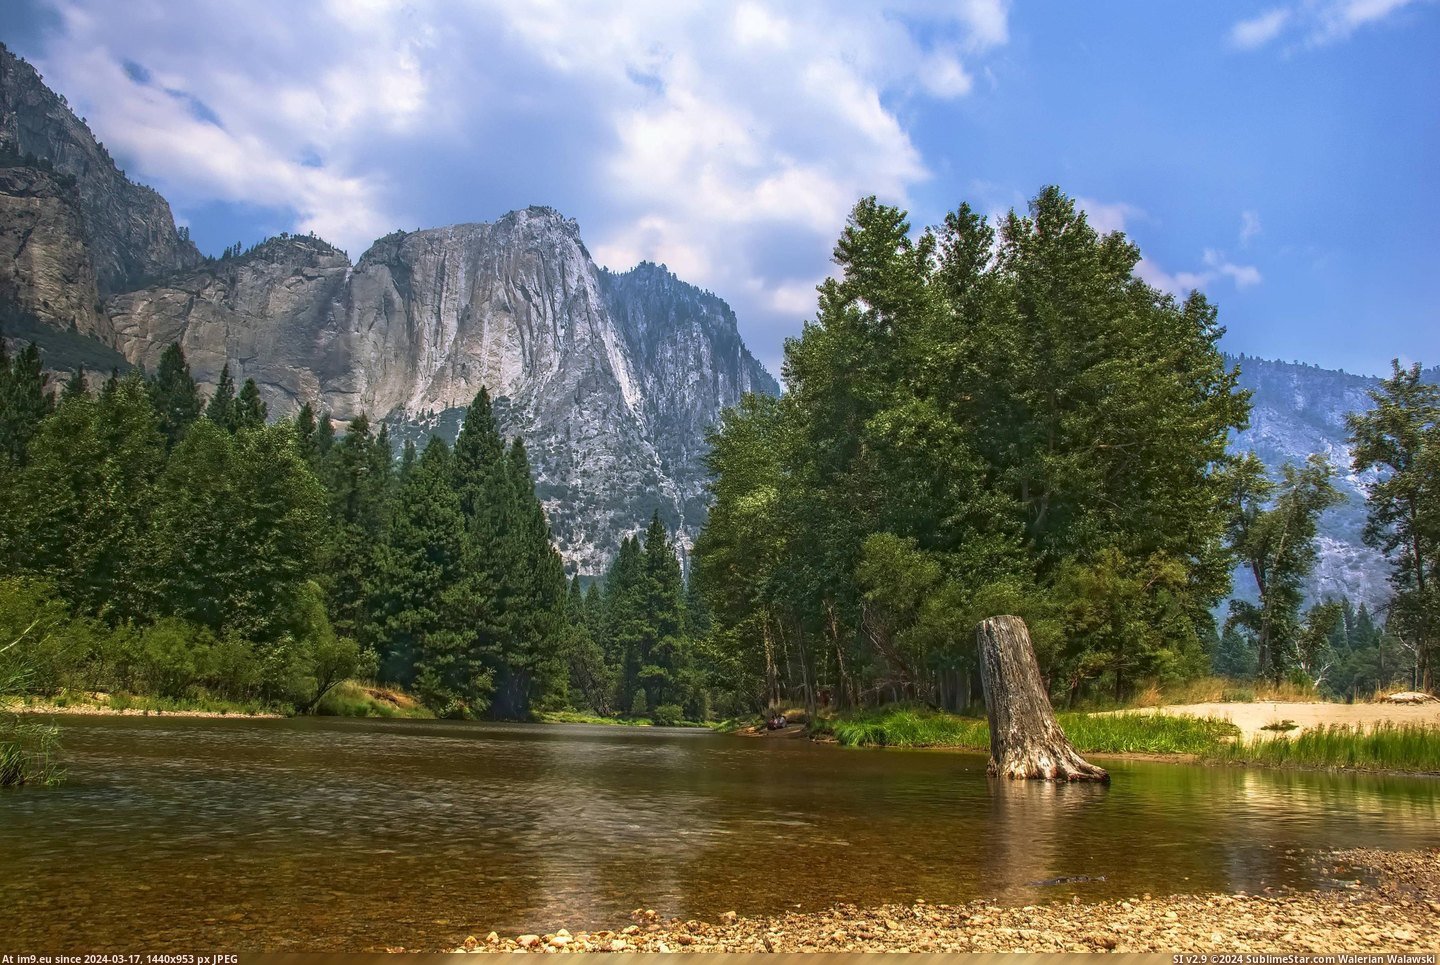 #Park #National #Vacation #Yosemite #Average [Earthporn] Your average Yosemite National Park vacation pic [2867x1910] Pic. (Obraz z album My r/EARTHPORN favs))